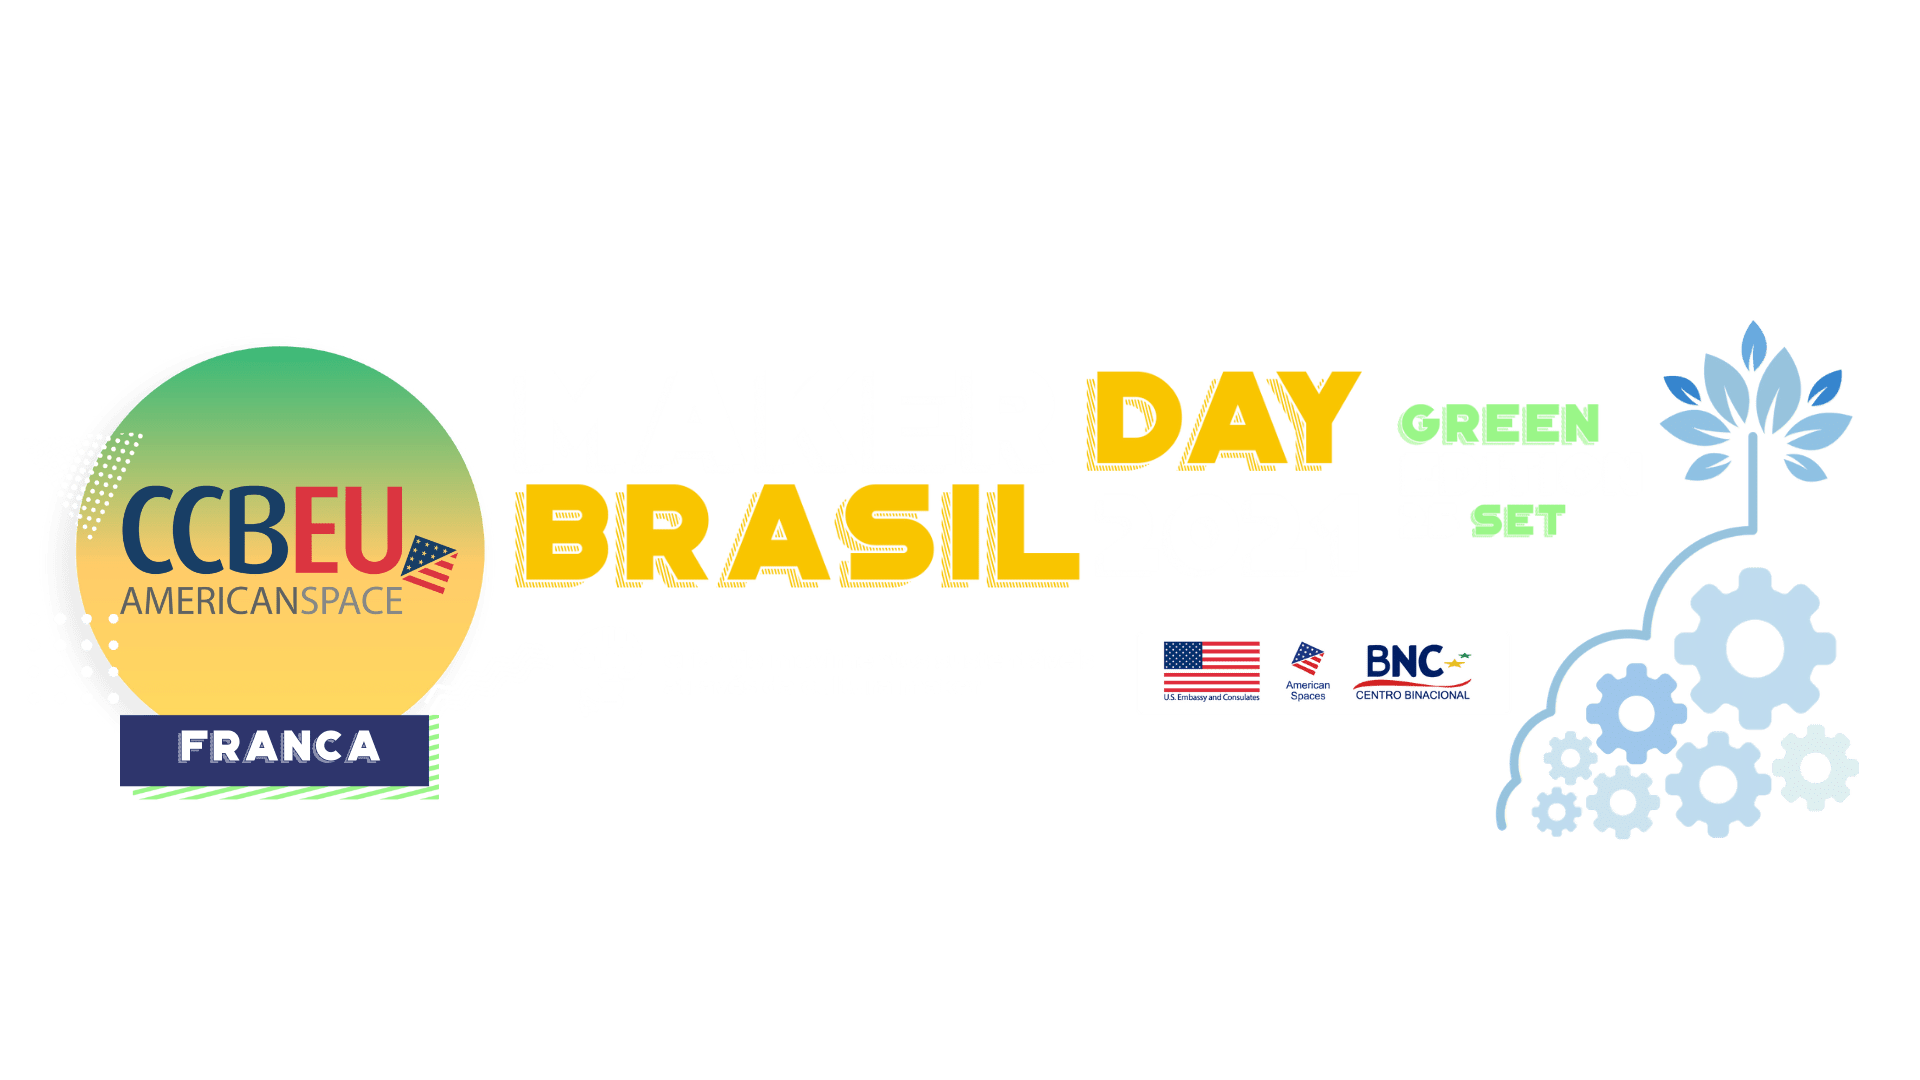 Franca - Maker Day Brasil Cover